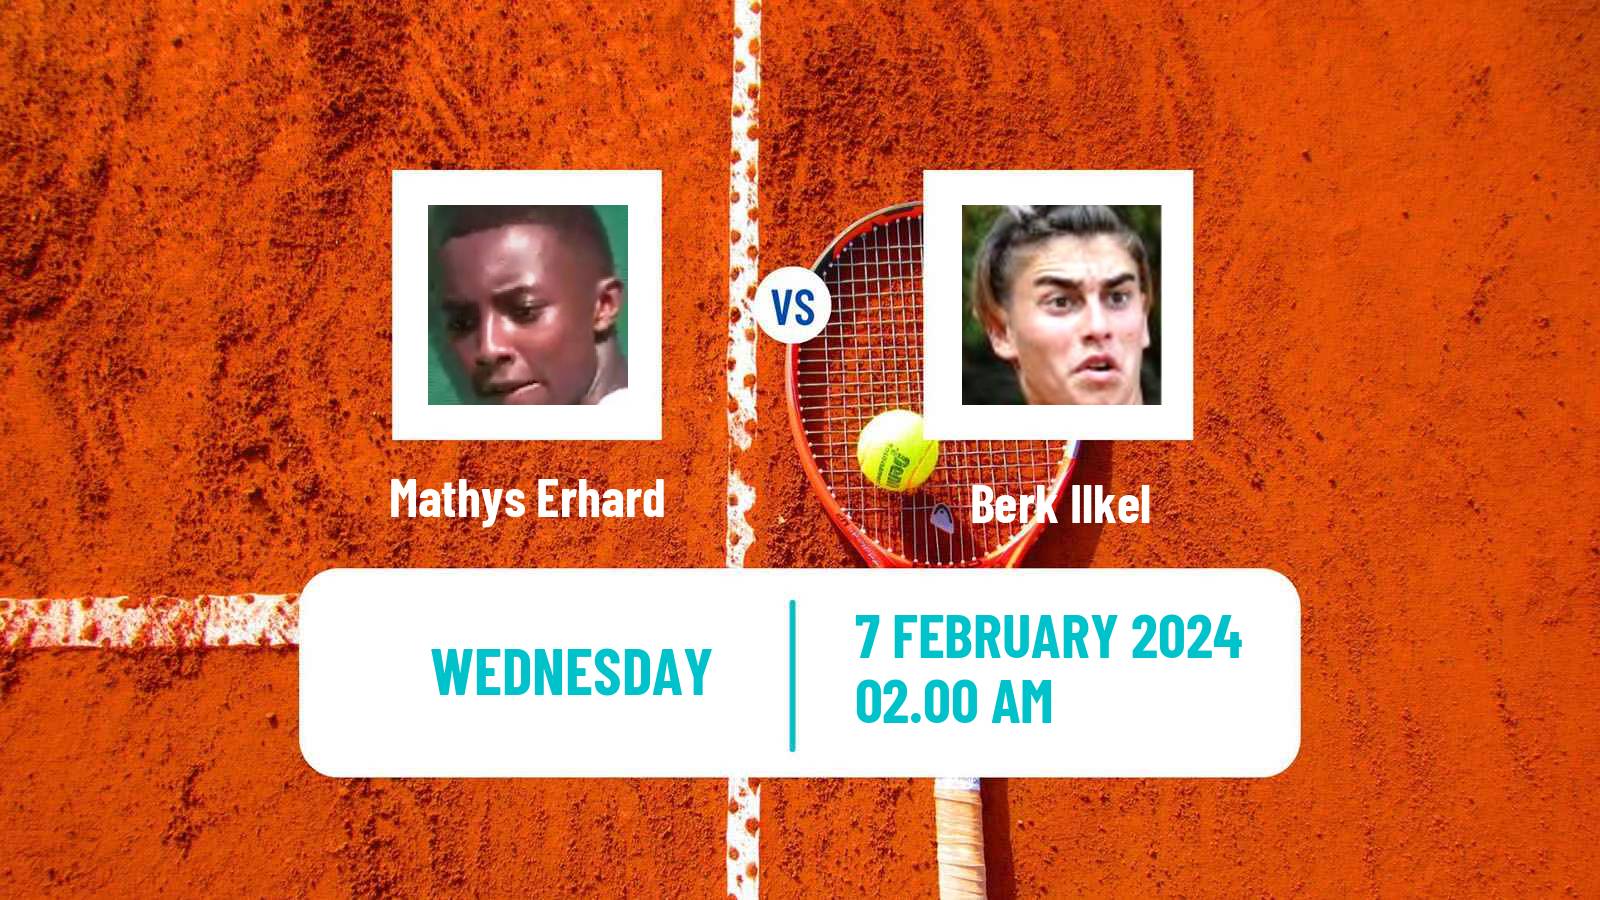 Tennis ITF M25 Antalya 2 Men Mathys Erhard - Berk Ilkel